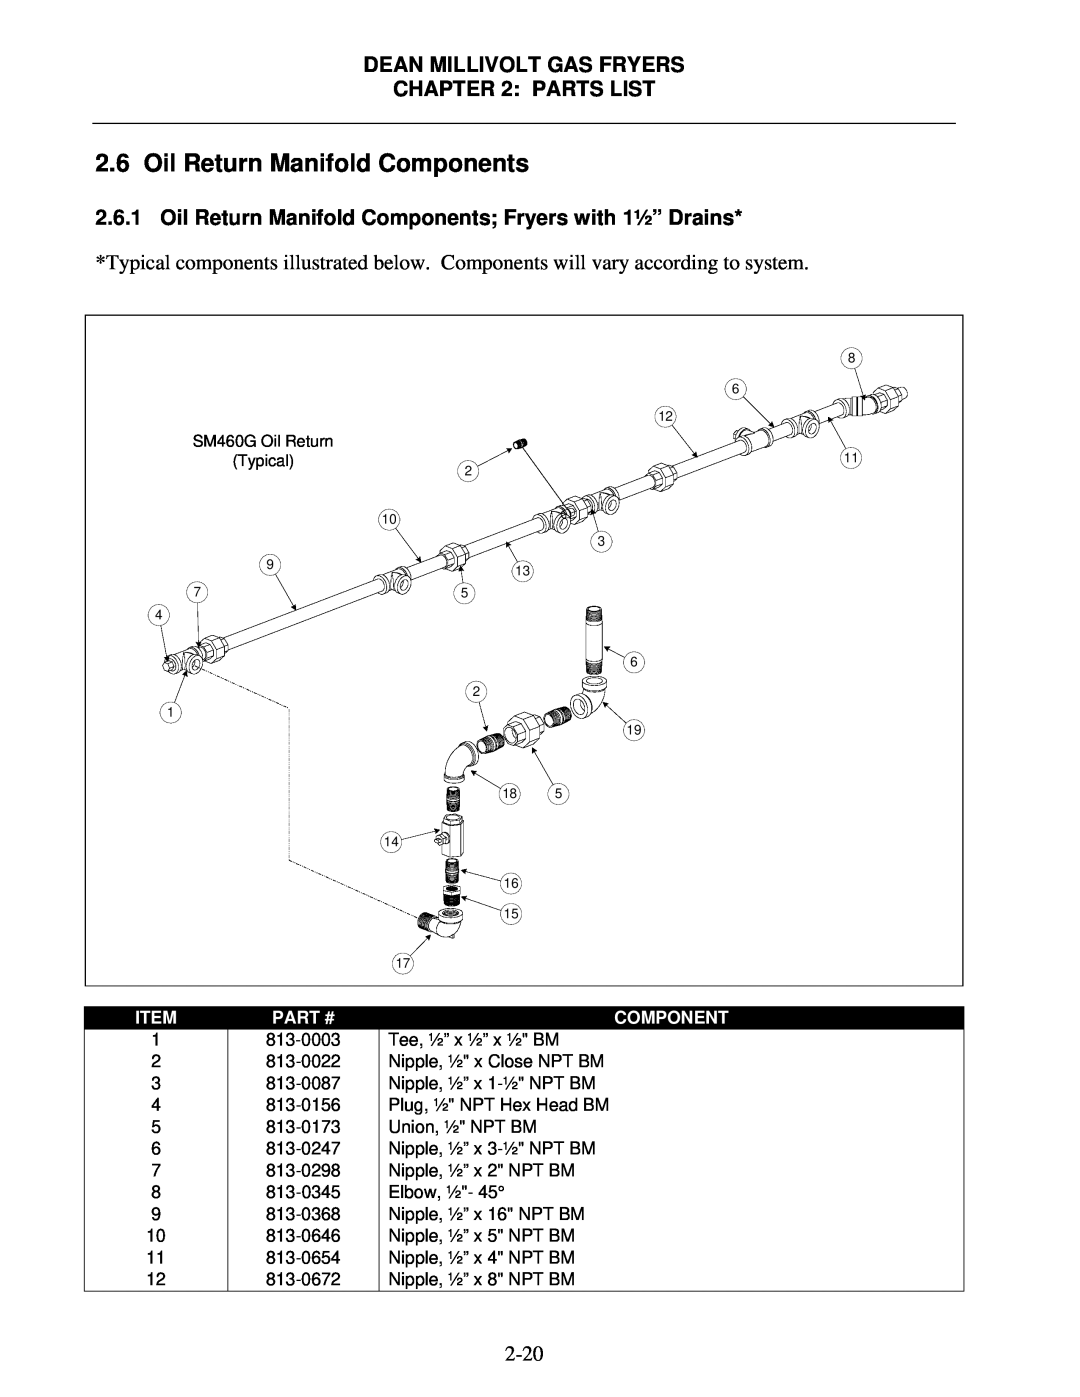 Frymaster Super Marathon Series manual Oil Return Manifold Components, Dean Millivolt Gas Fryers : Parts List, Item, Part # 